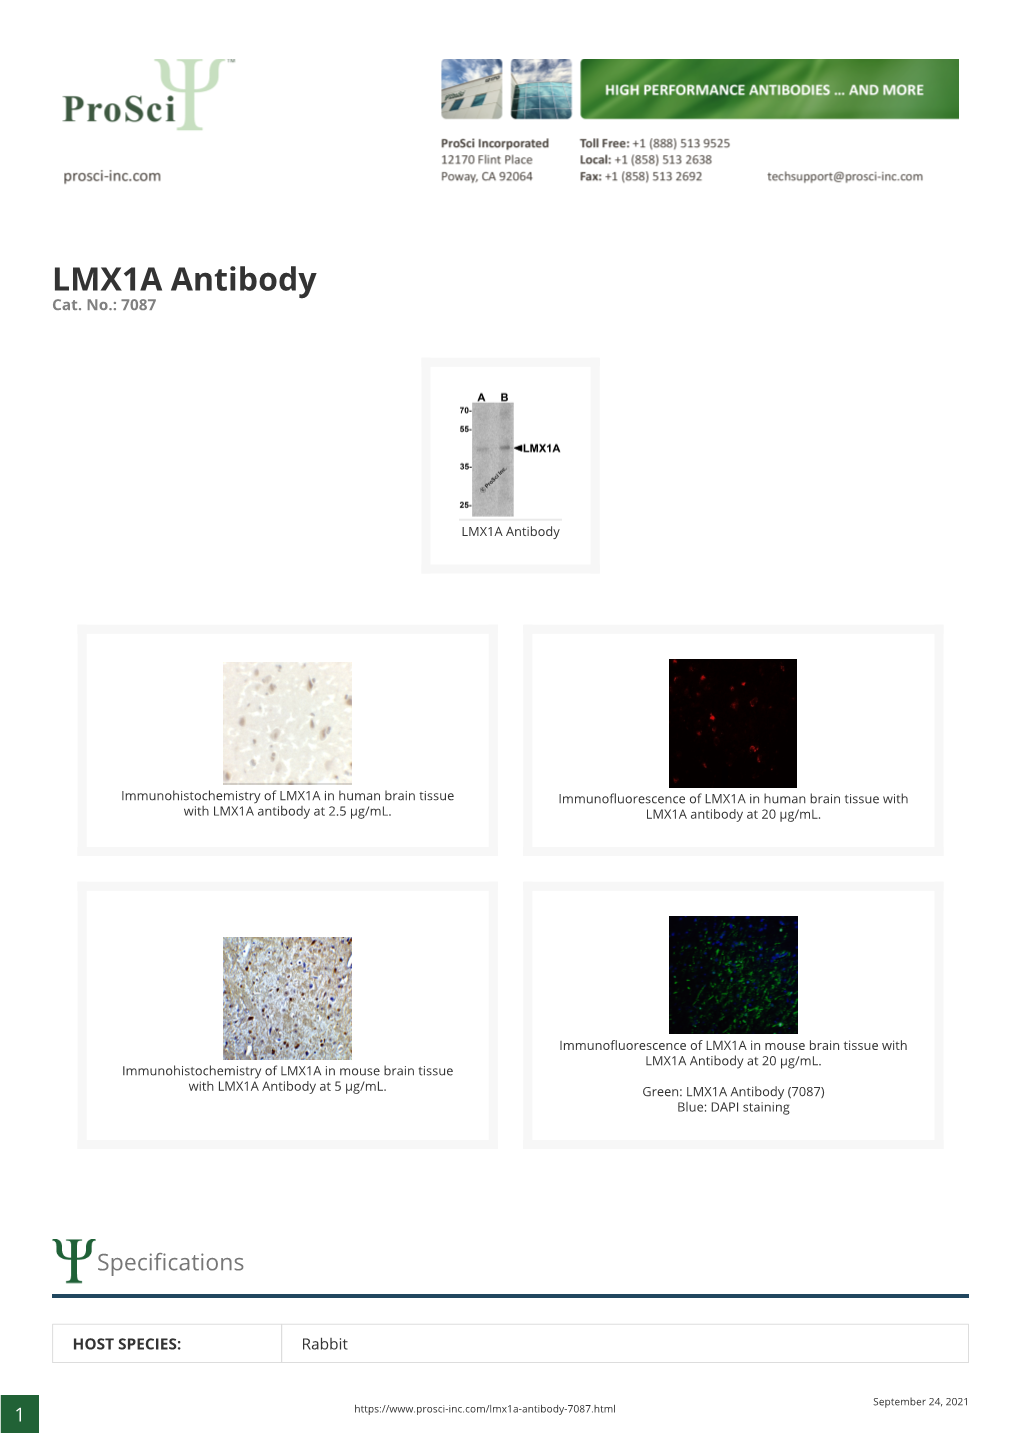 LMX1A Antibody Cat